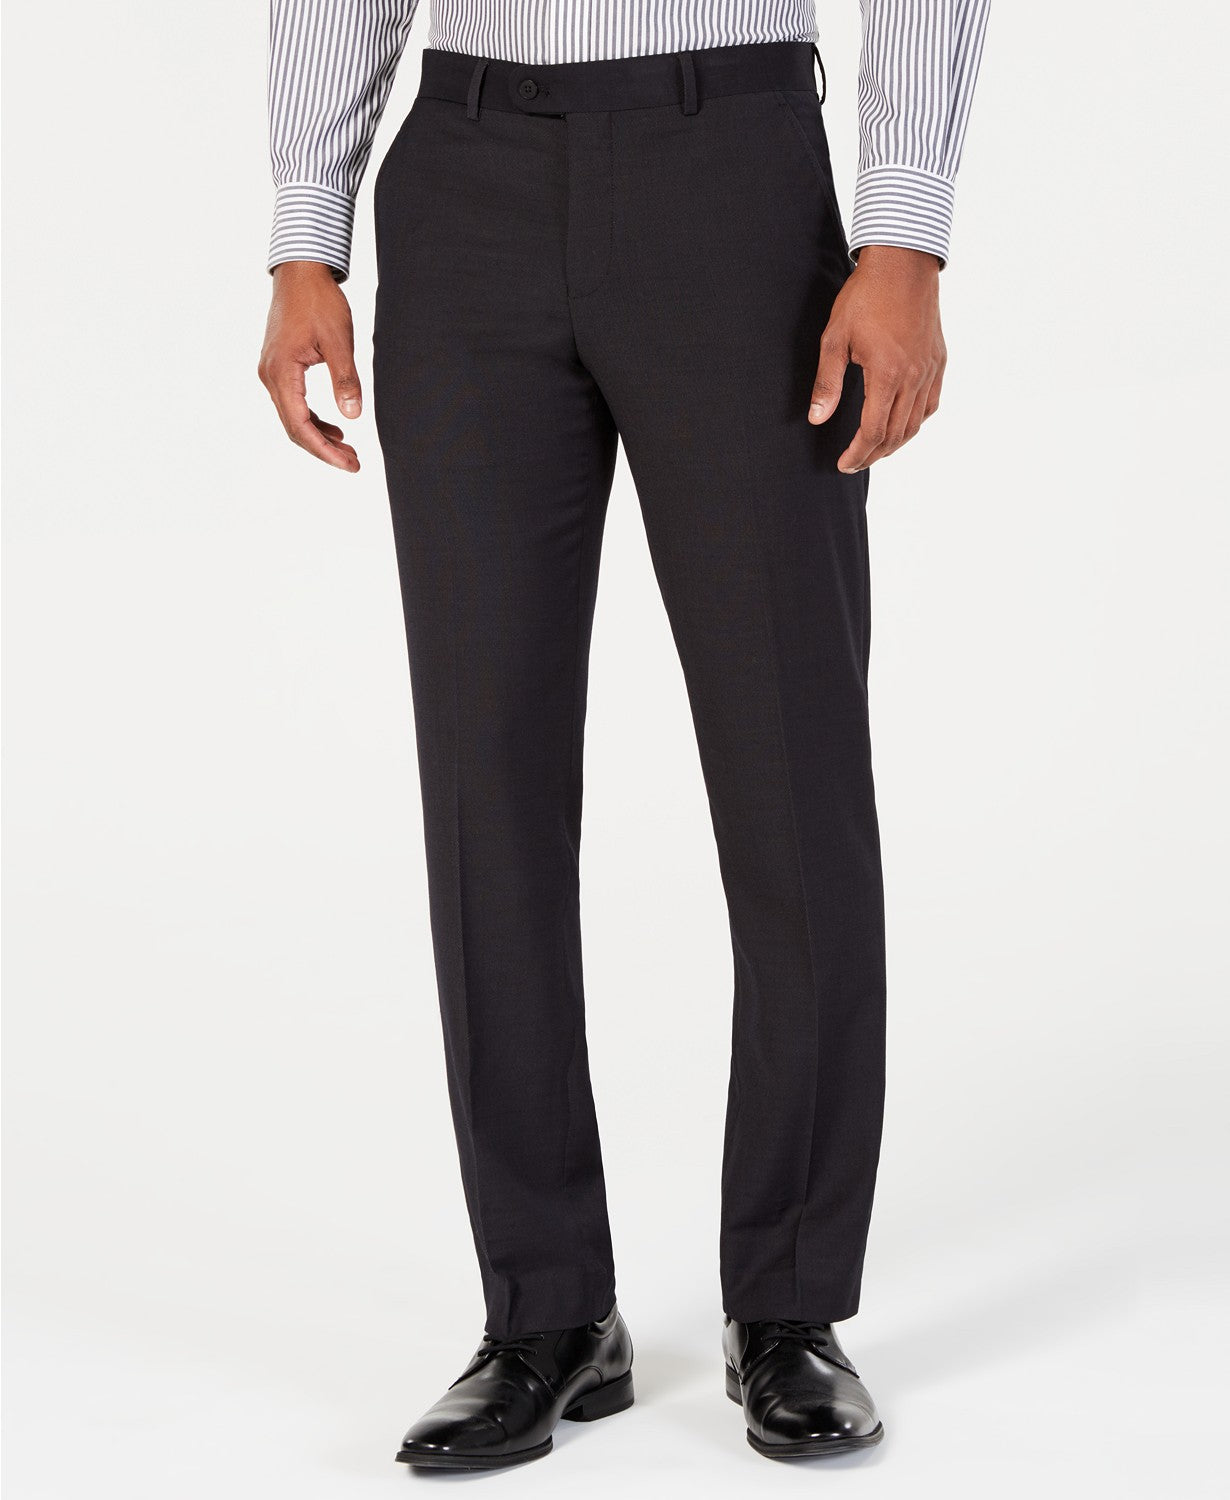 Perry Ellis Men's Dress Pants 38 x 32 Black Portfolio Slim-Fit Stretch